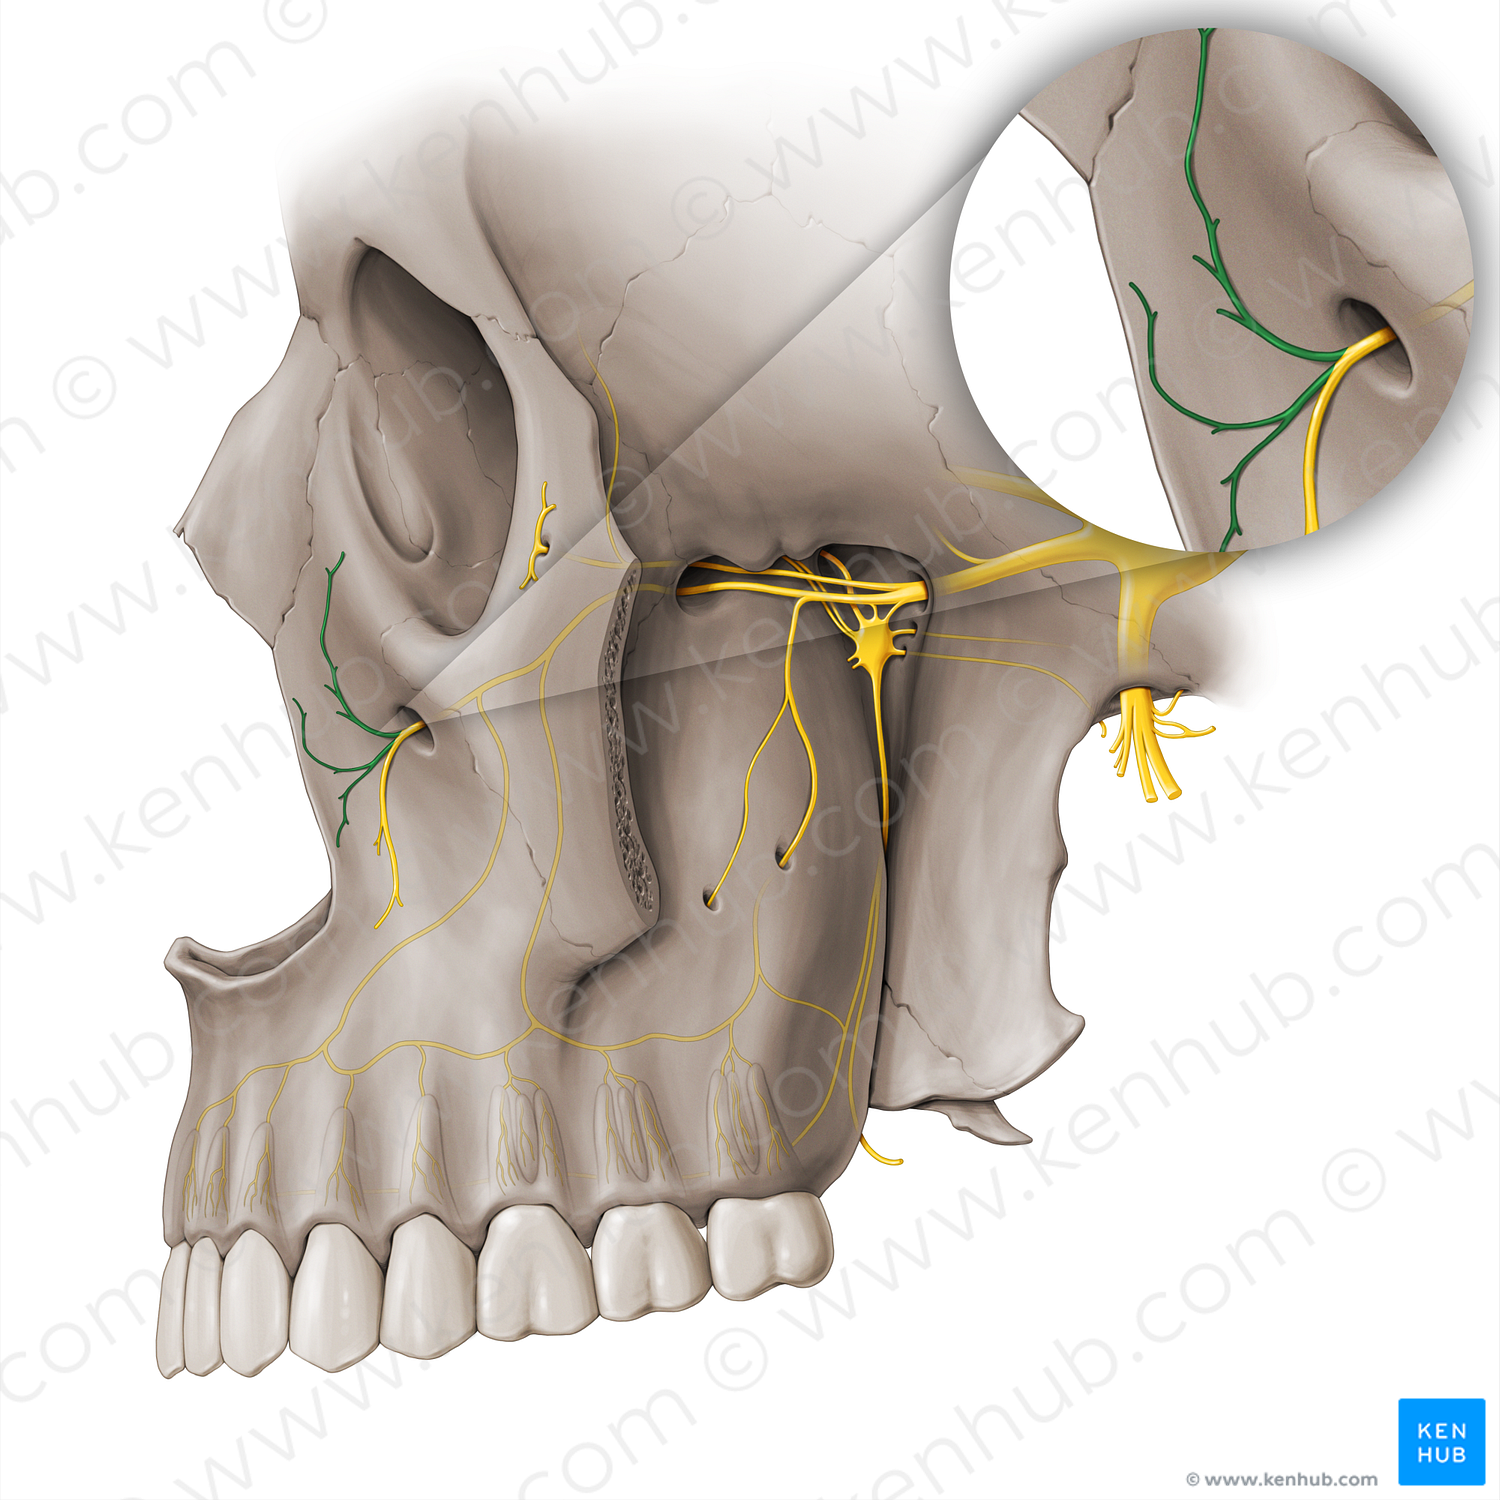 Nasal branches of infraorbital nerve (#18516)